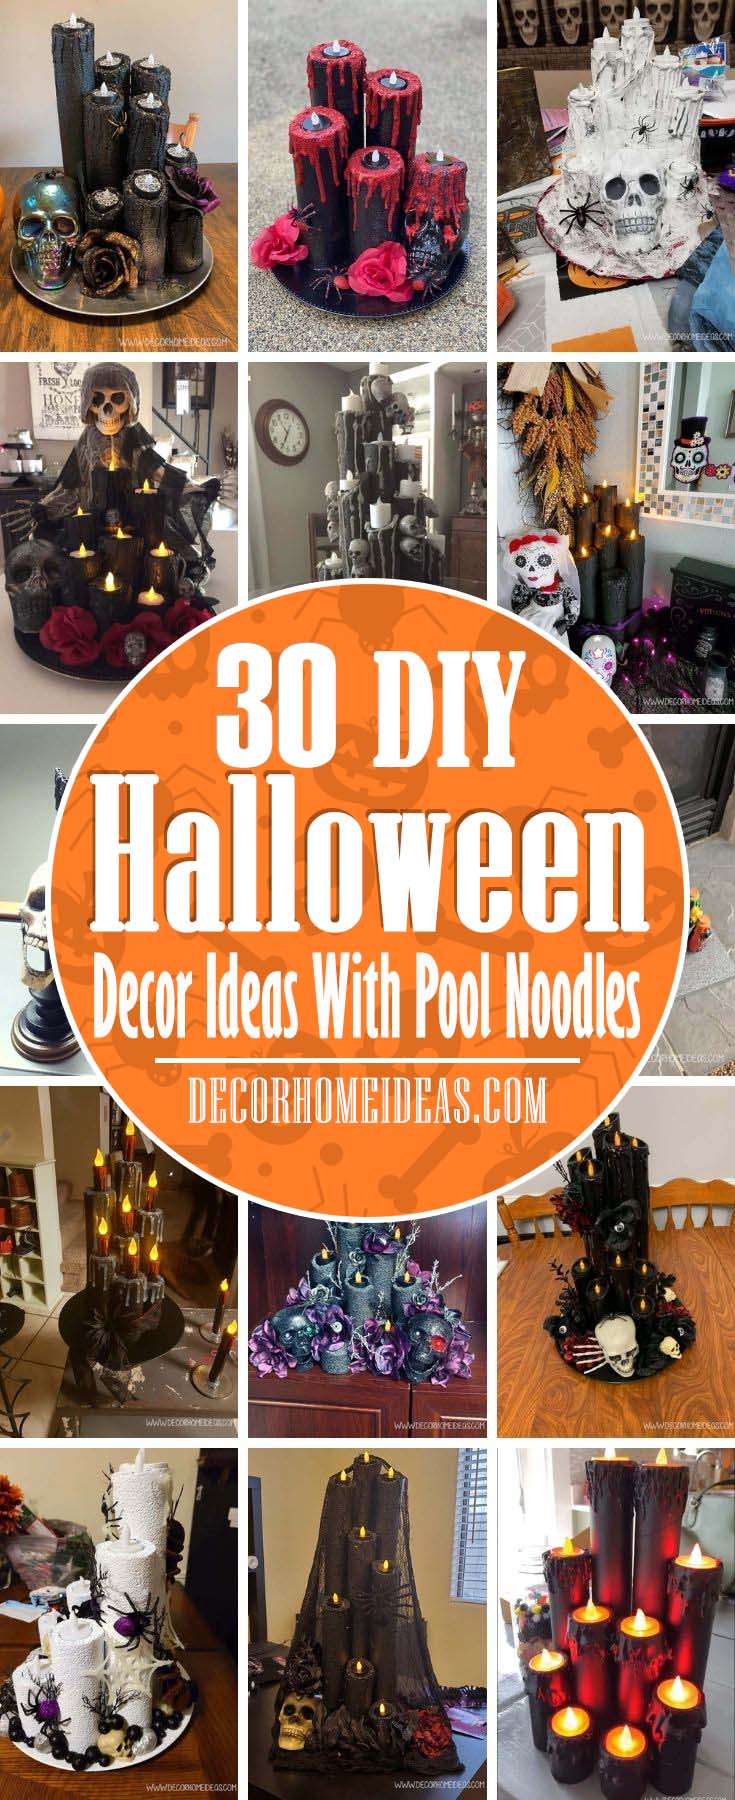 Best Pool Noodles Halloween Decor Centerpieces. Creative ideas to create Halloween centerpieces and decorations with pool noodles. #decorhomeideas